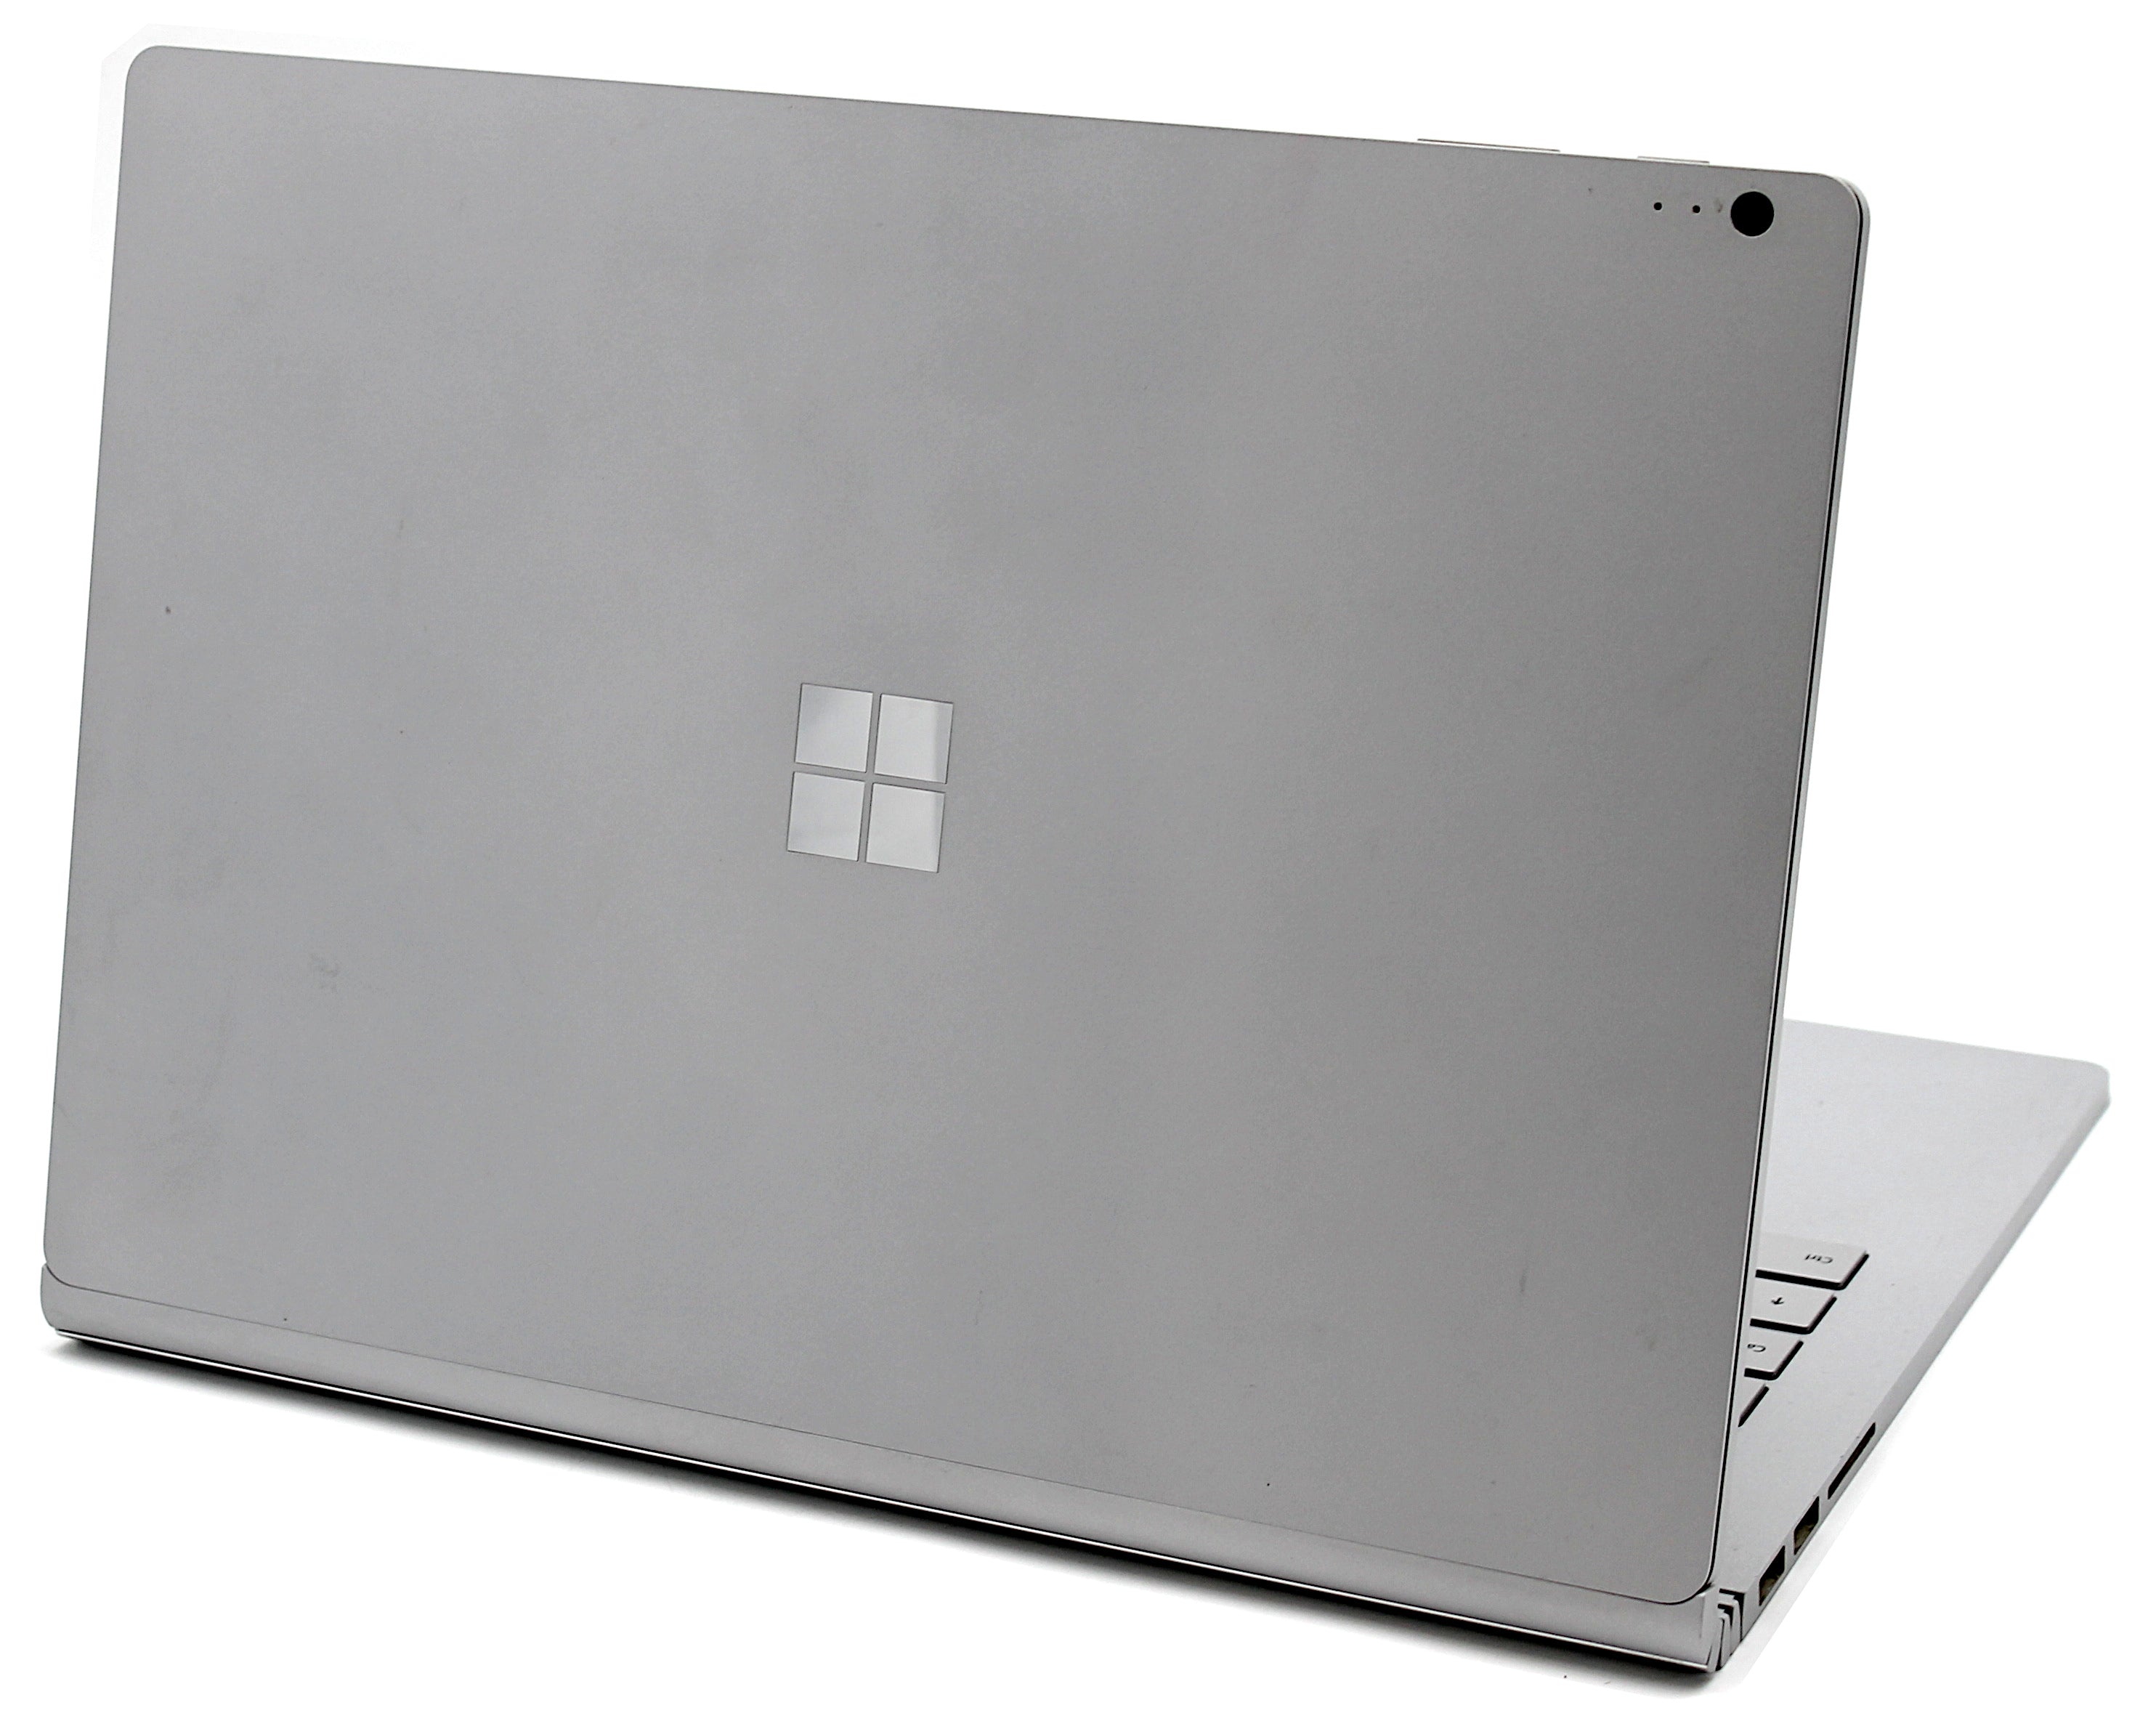 Microsoft Surface Book 2 Laptop, 13.5" i5 8th Gen, 8GB RAM, 256GB SSD